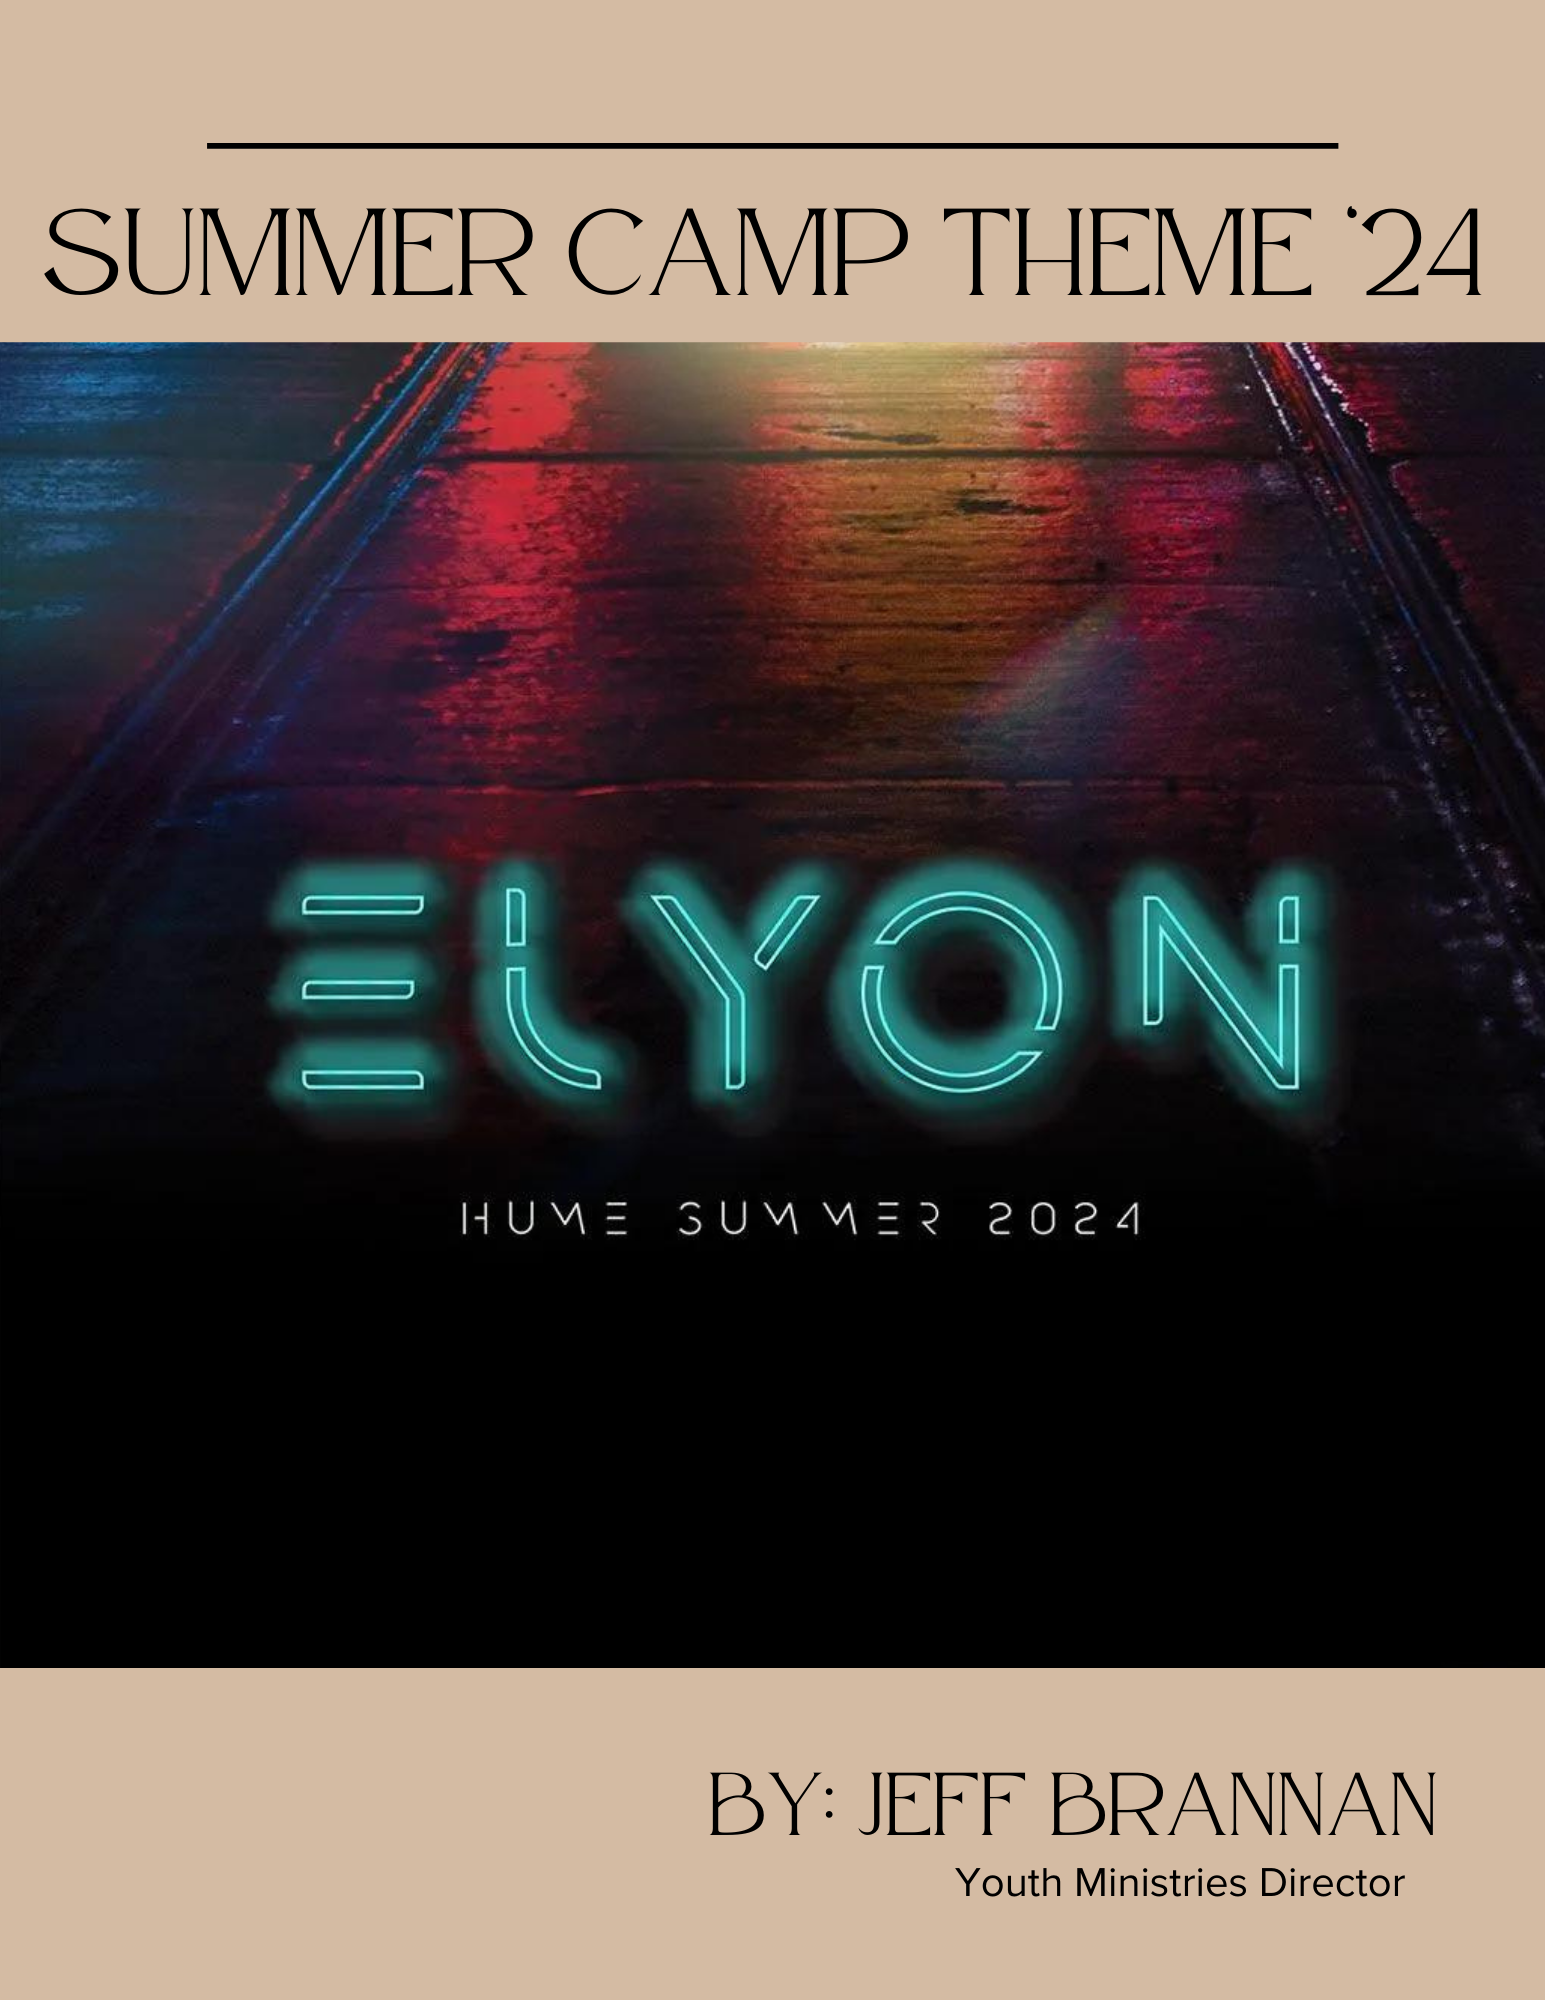 Summer Camp Theme ’24